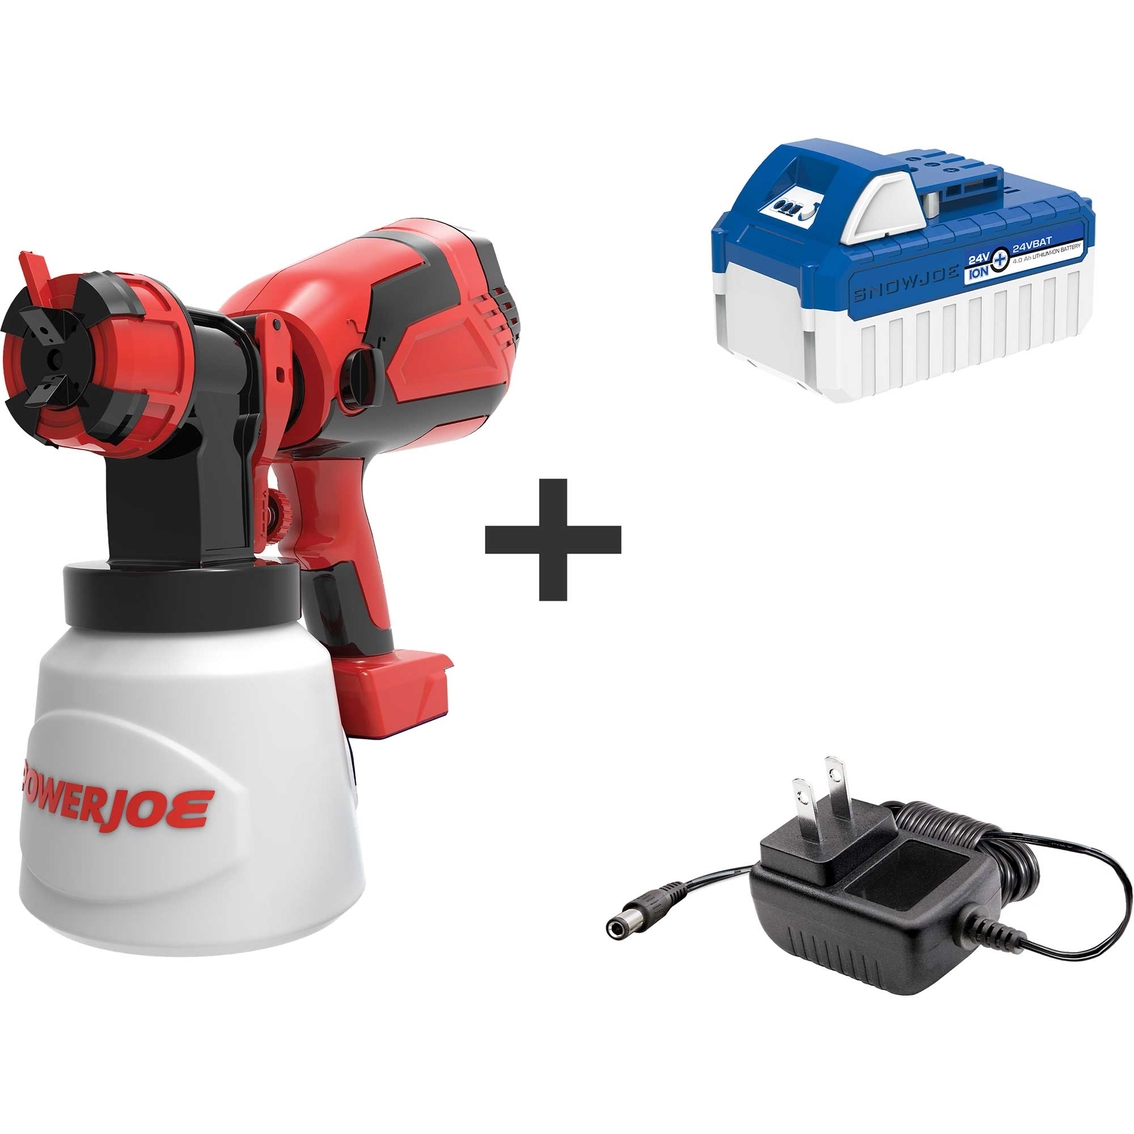 Sun Joe 24v Ion+ Cordless Hvlp Paint Sprayer With 4.0 Ah Battery + Charger, Portable Power Tools, Patio, Garden & Garage